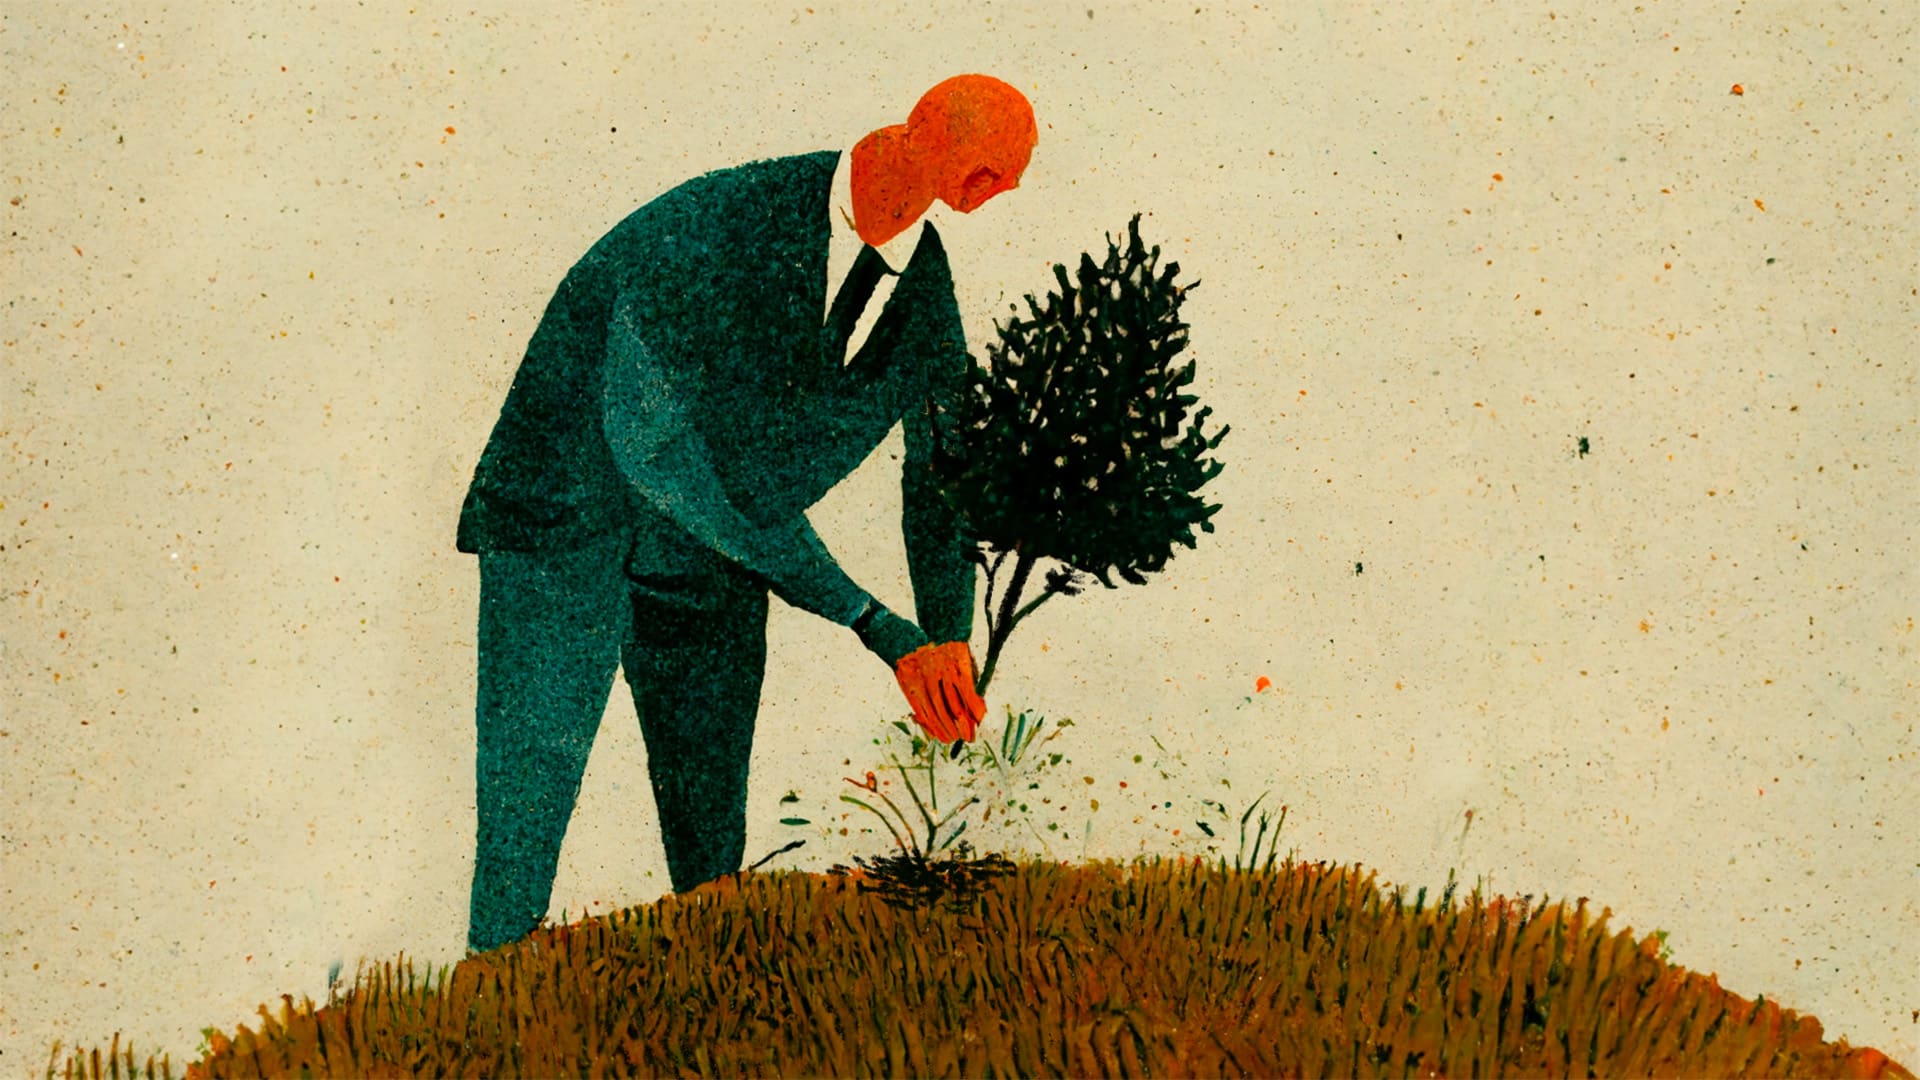 Stylized illustration of businessman planting a tree